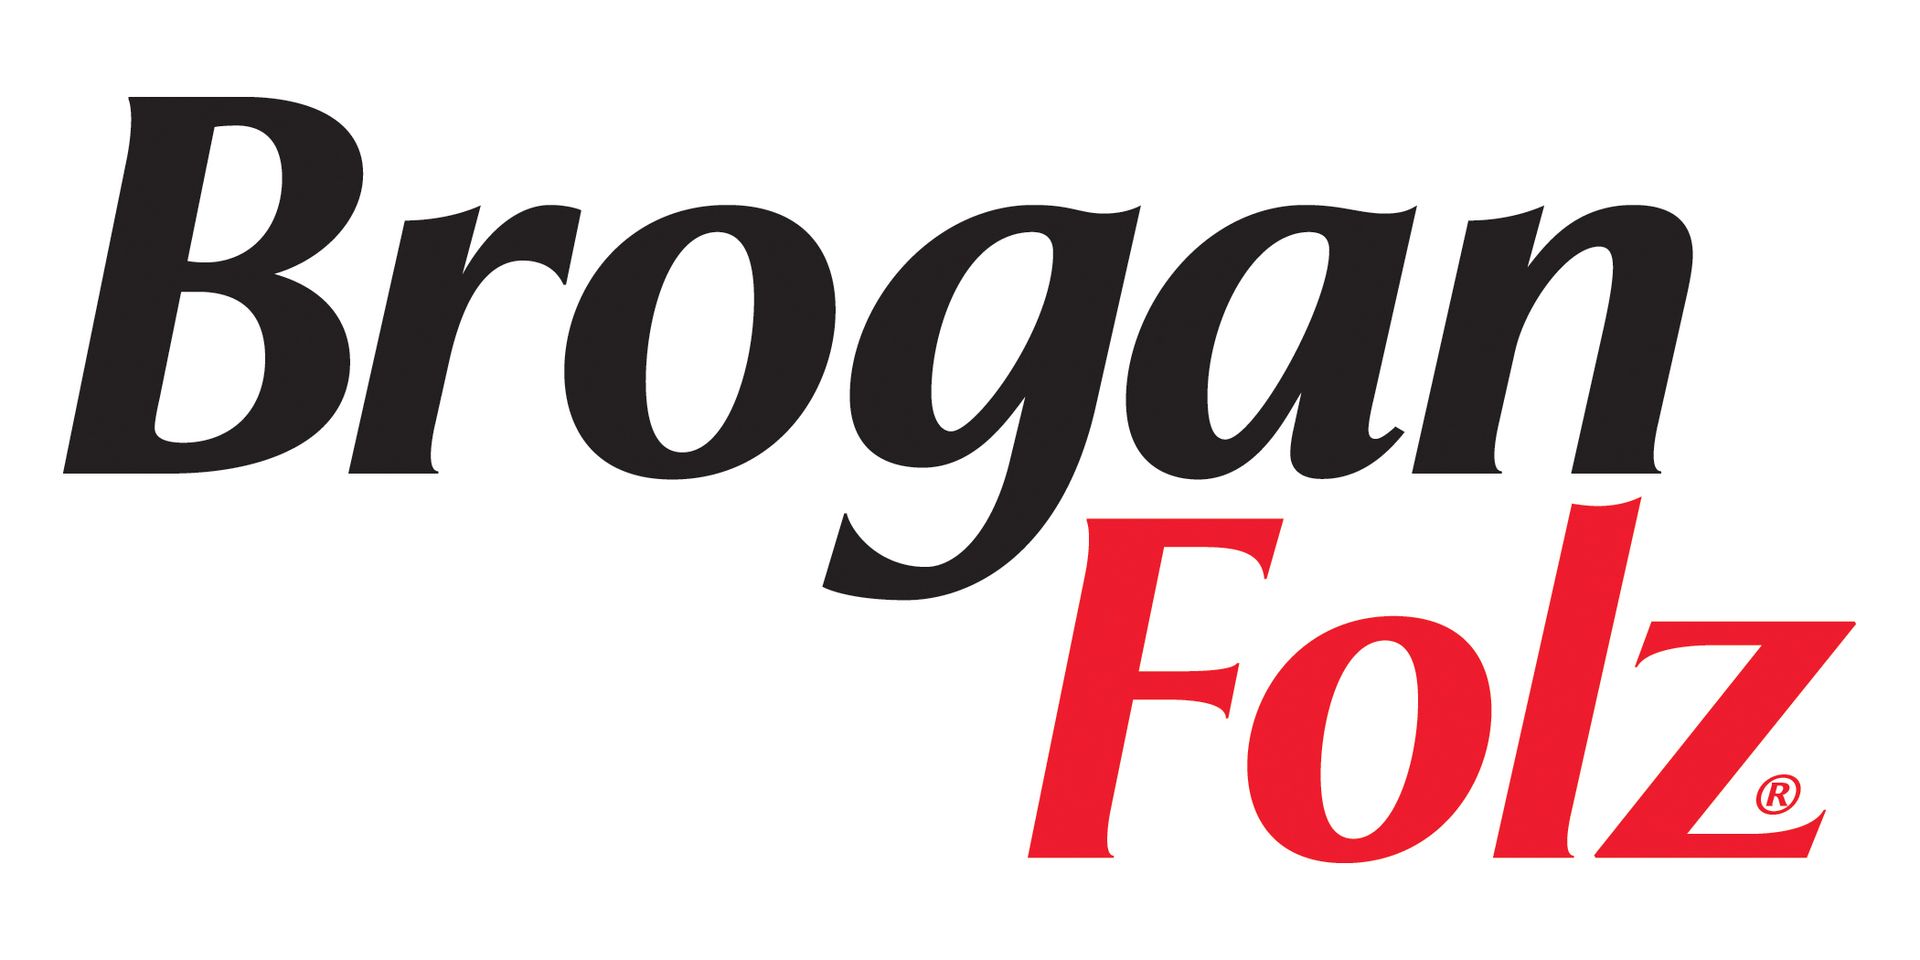 Brogan & Folz Firestone logo